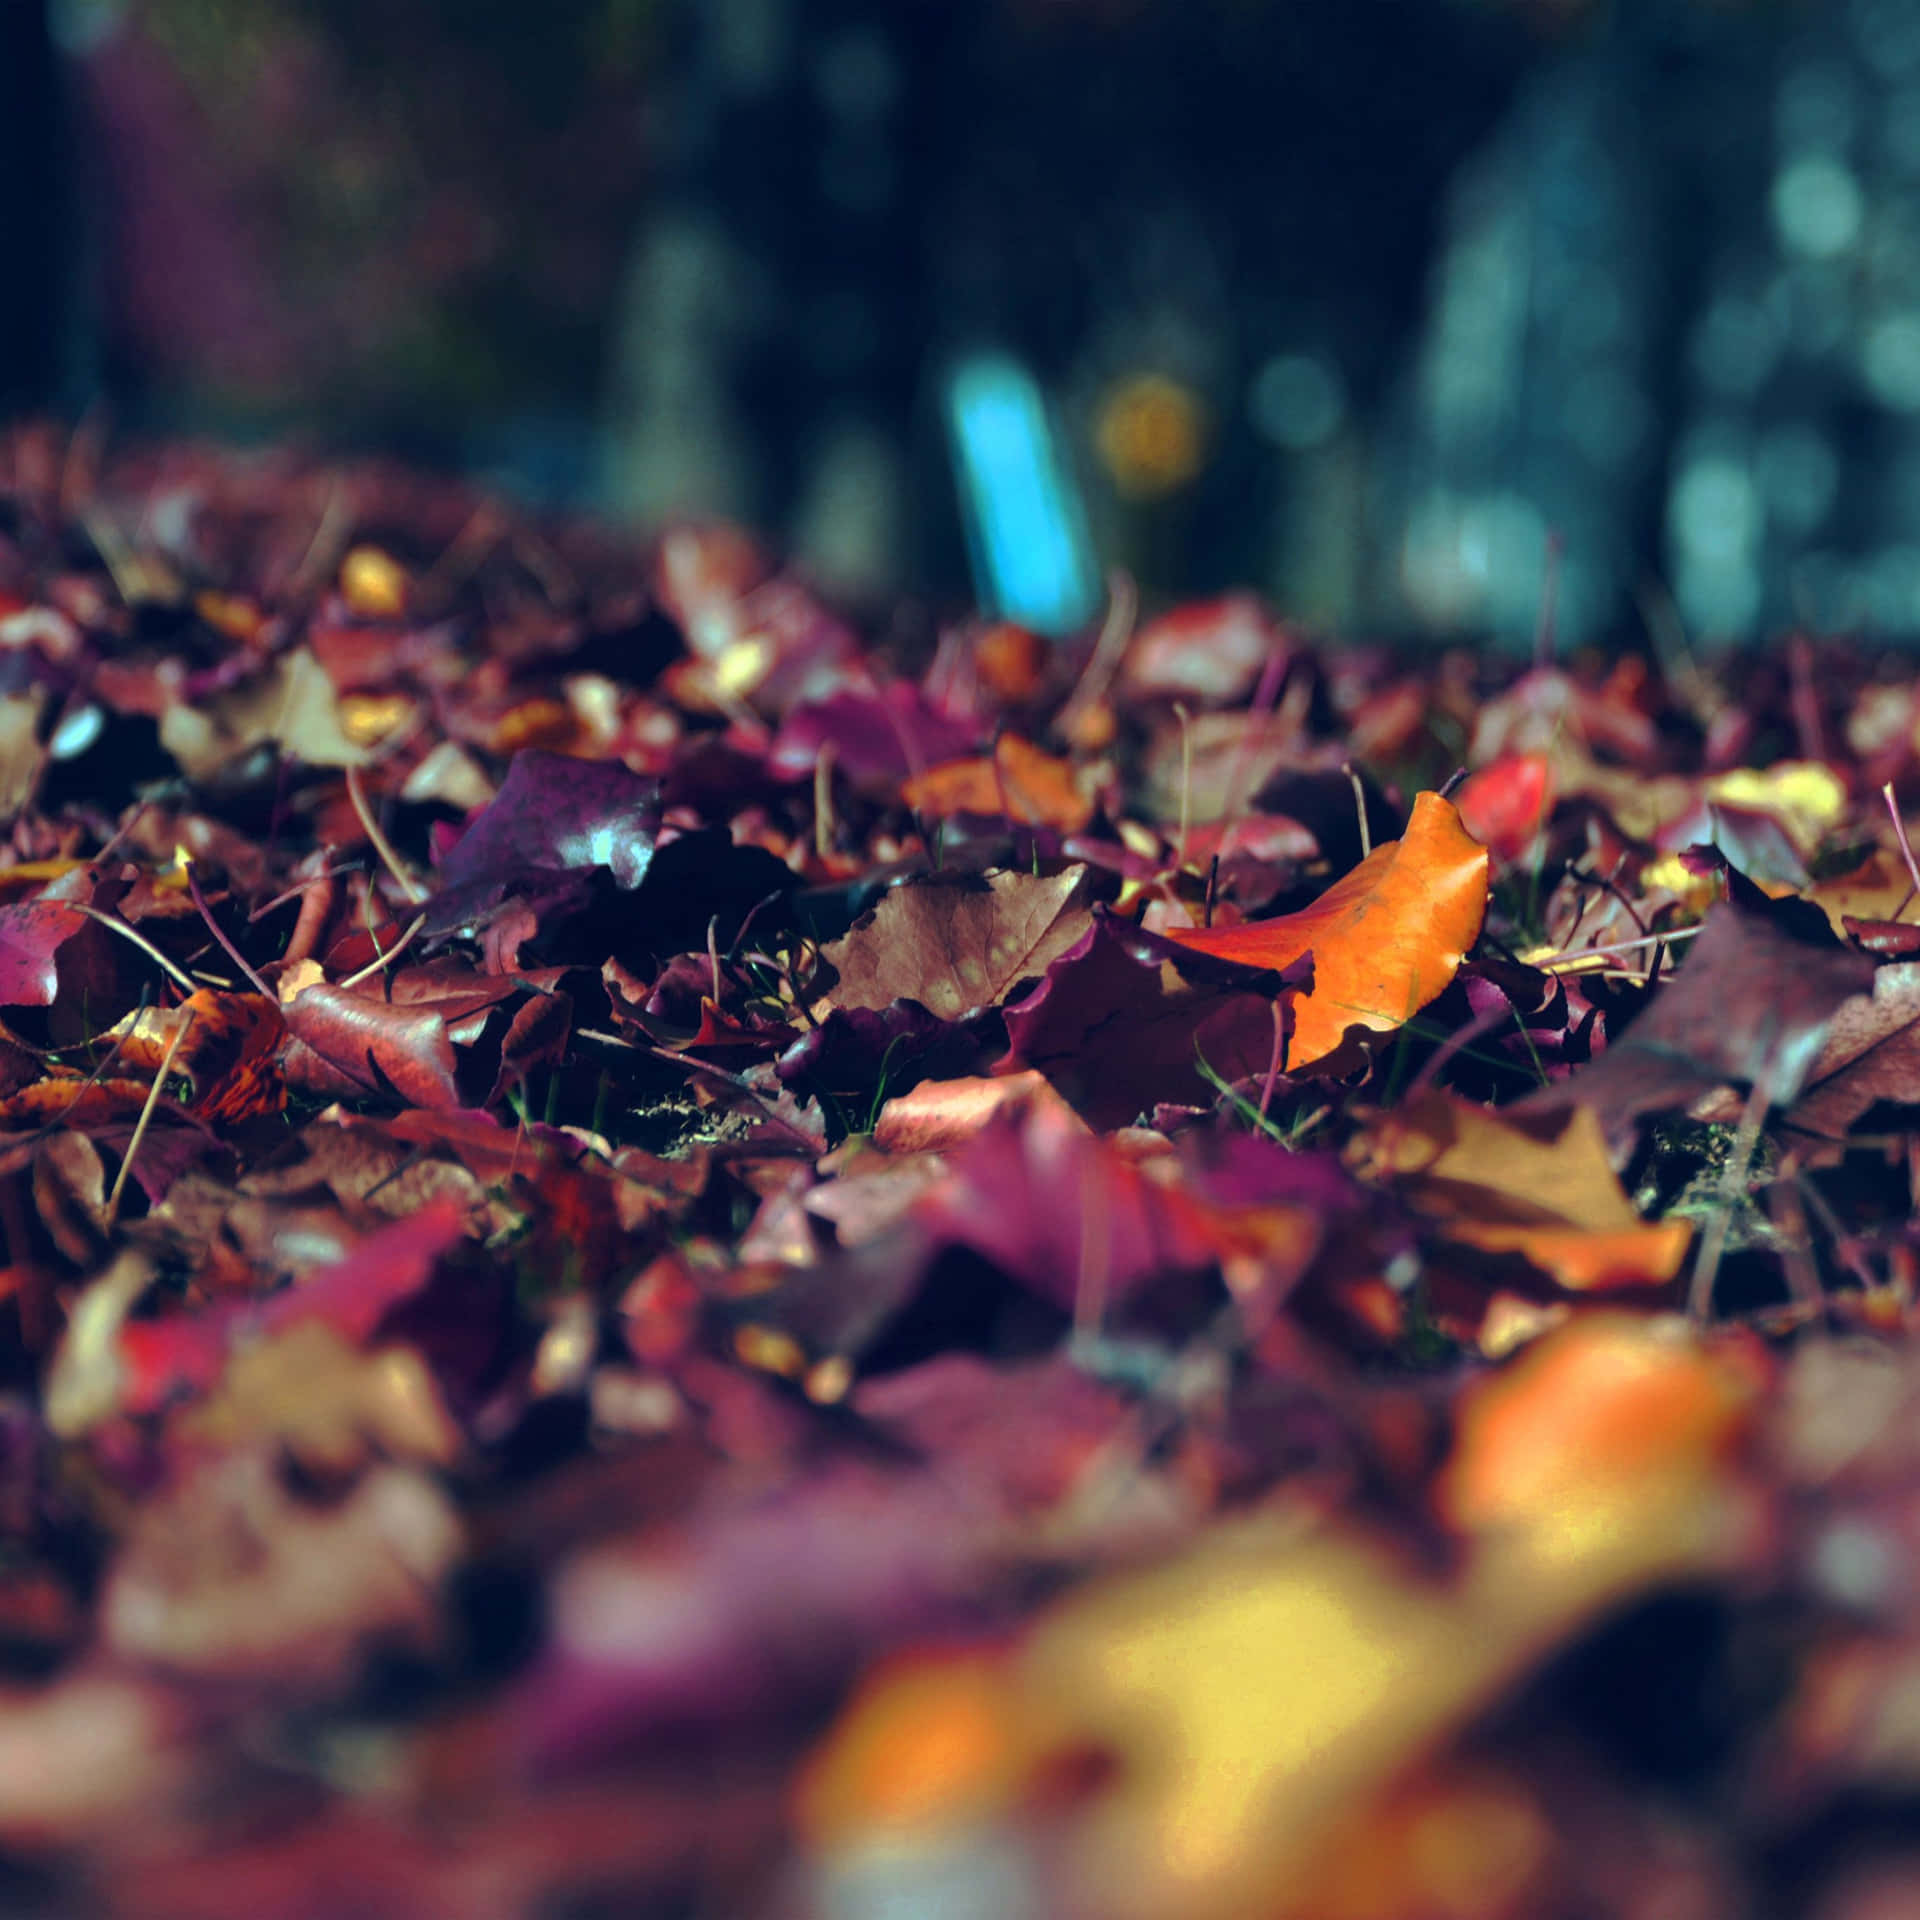 Dark Autumn Dried Leaves Close Up Shot Wallpaper